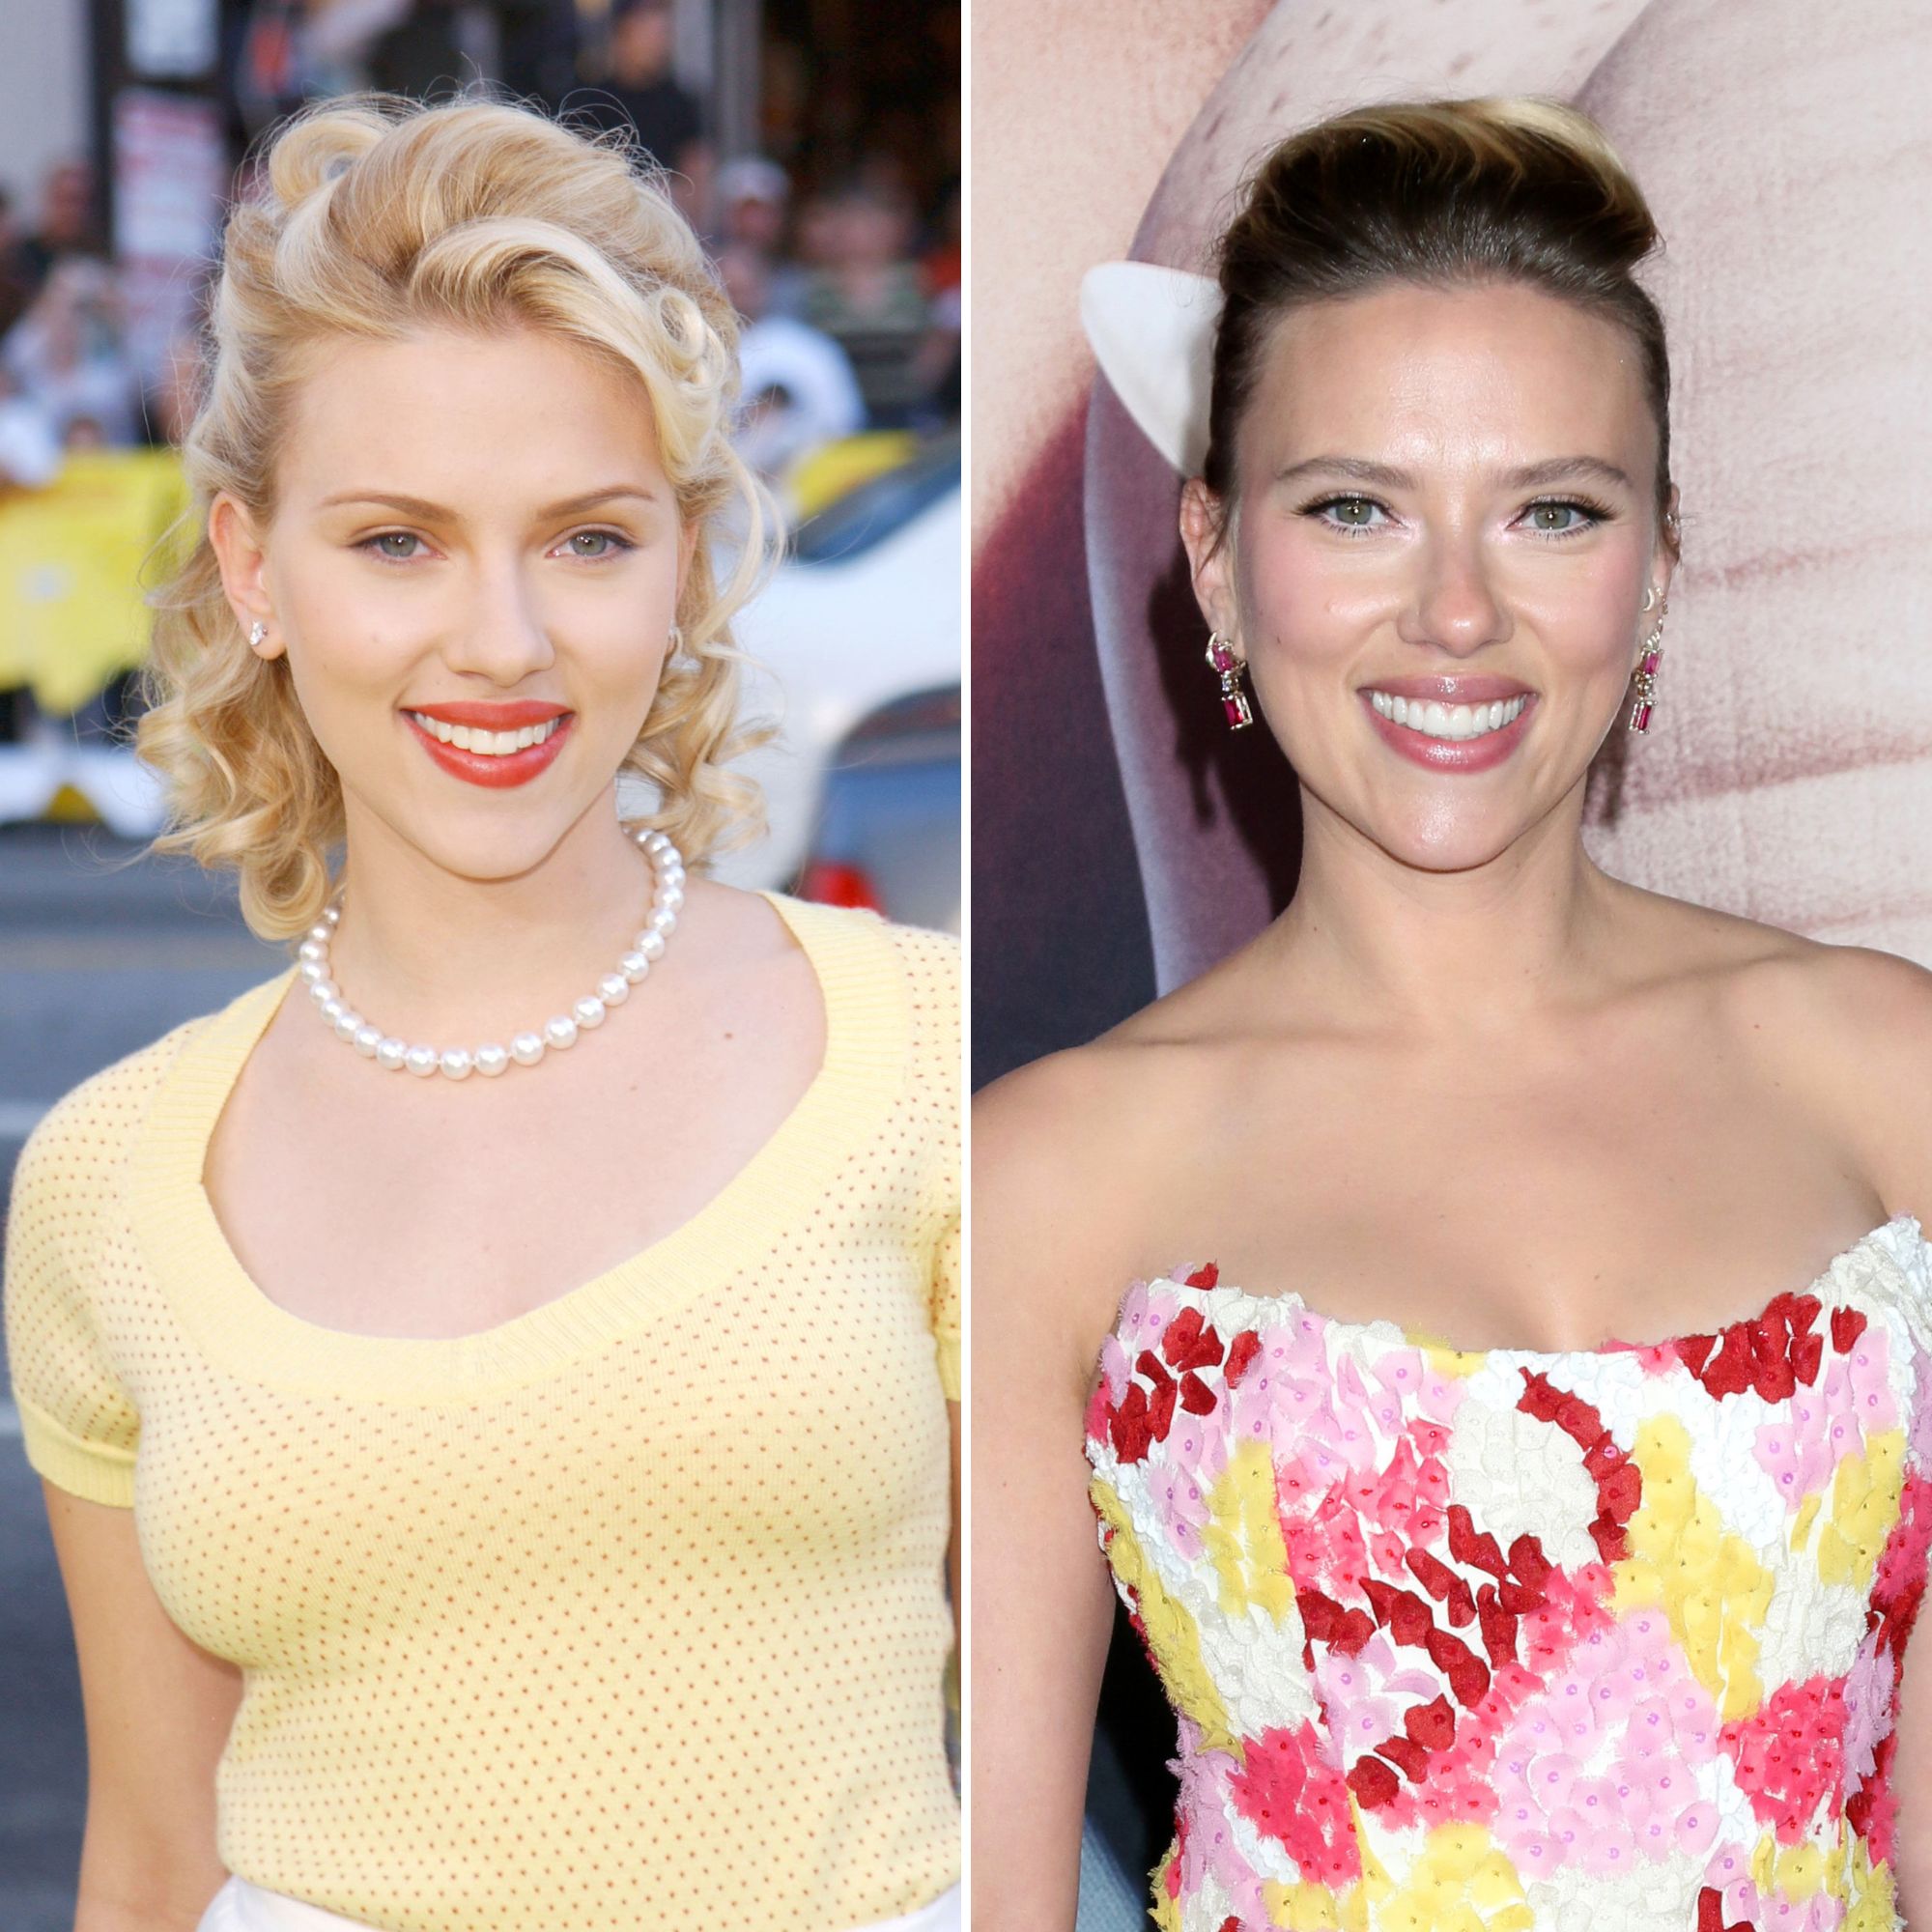 Did Scarlett Johansson Get Plastic Surgery? Then, Now Photos